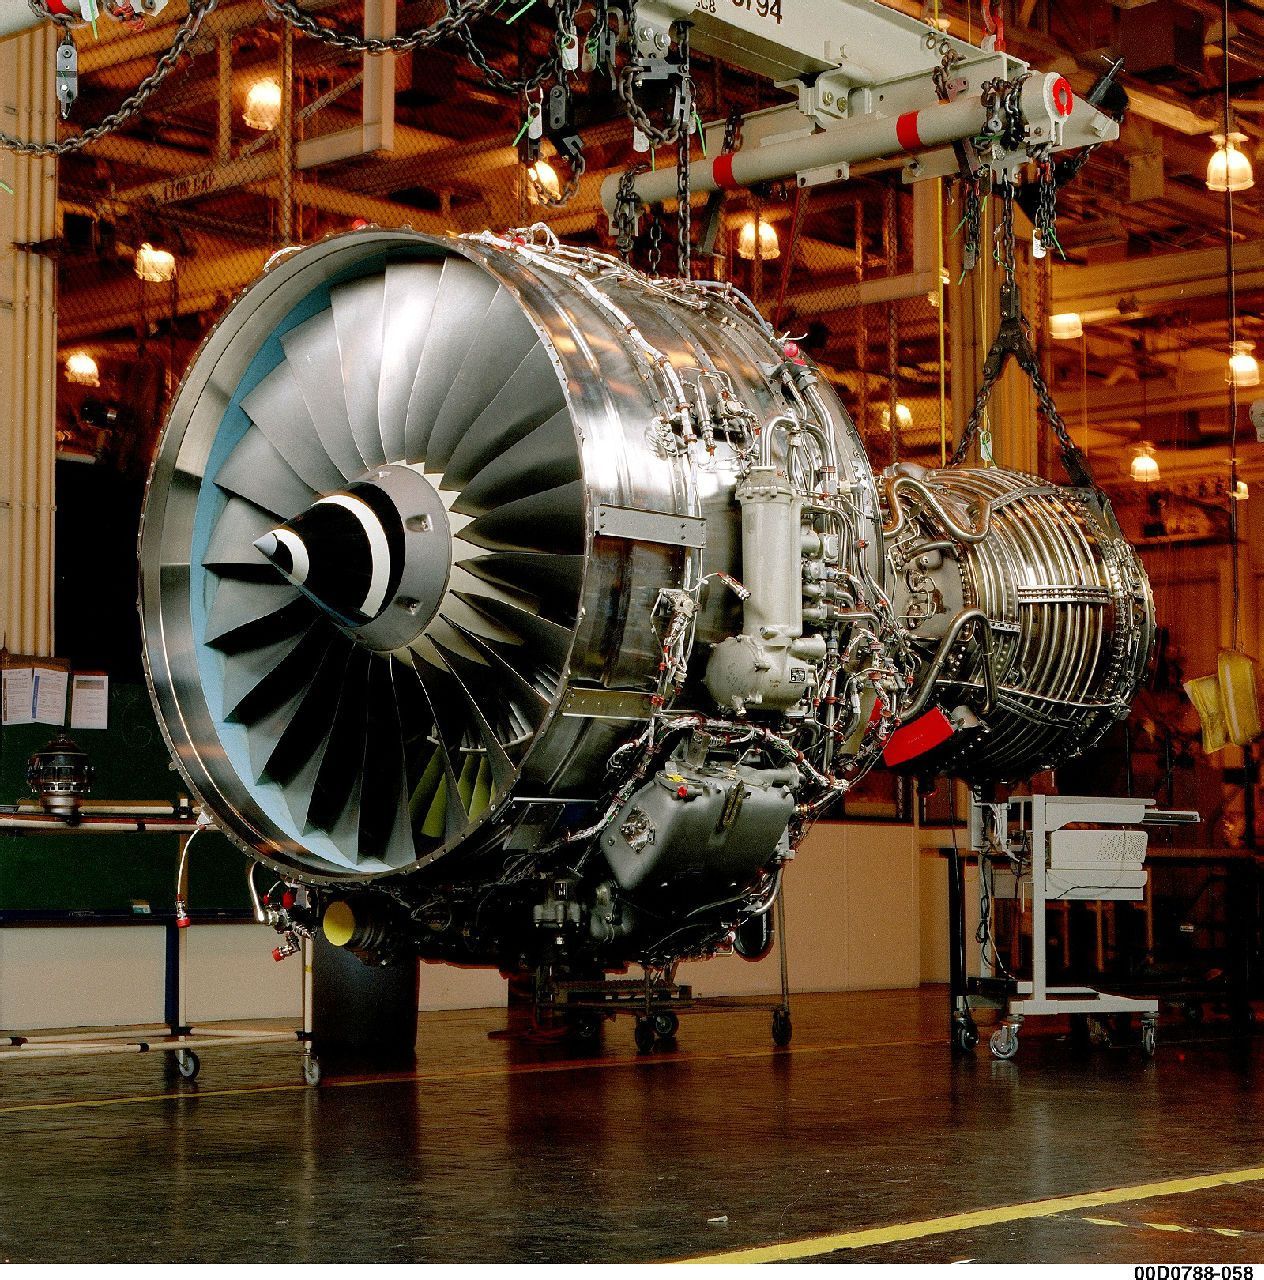 v2500(公司)v2500发动机是国际航空发动机公司(iae)研制生产的双转子